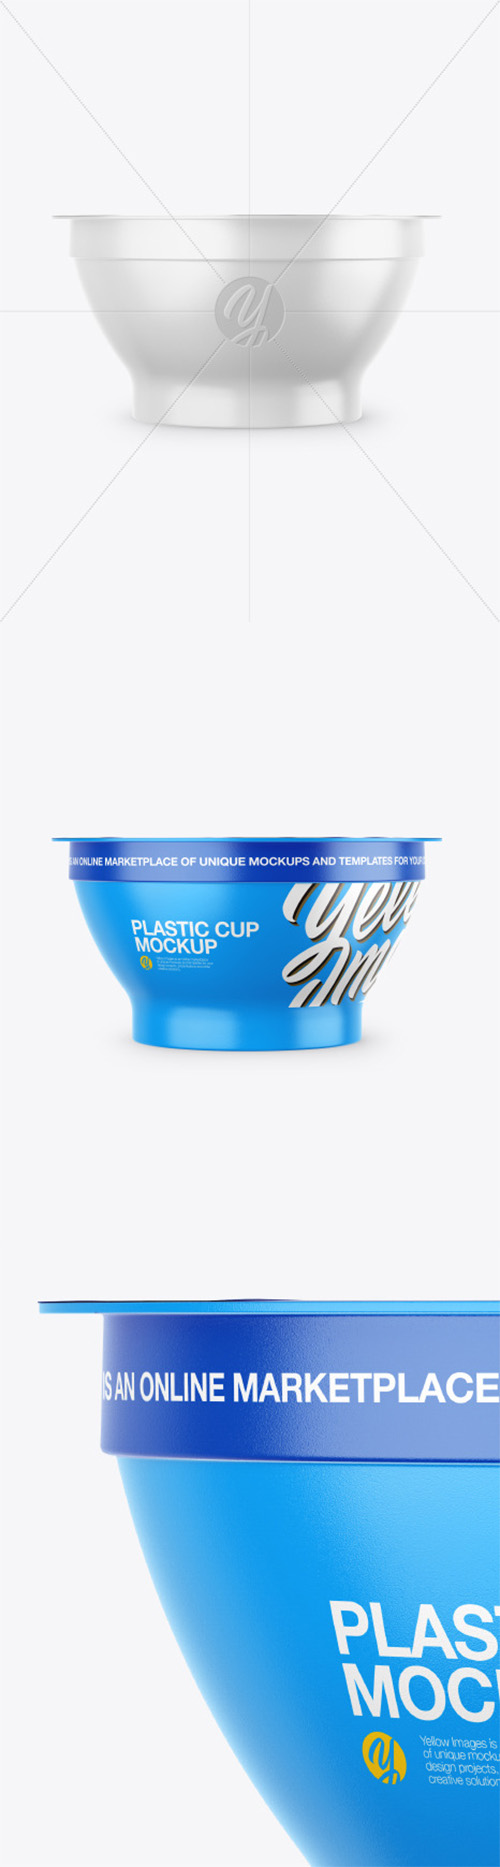 Plastic Yogurt Cup Mockup 52446 TIF